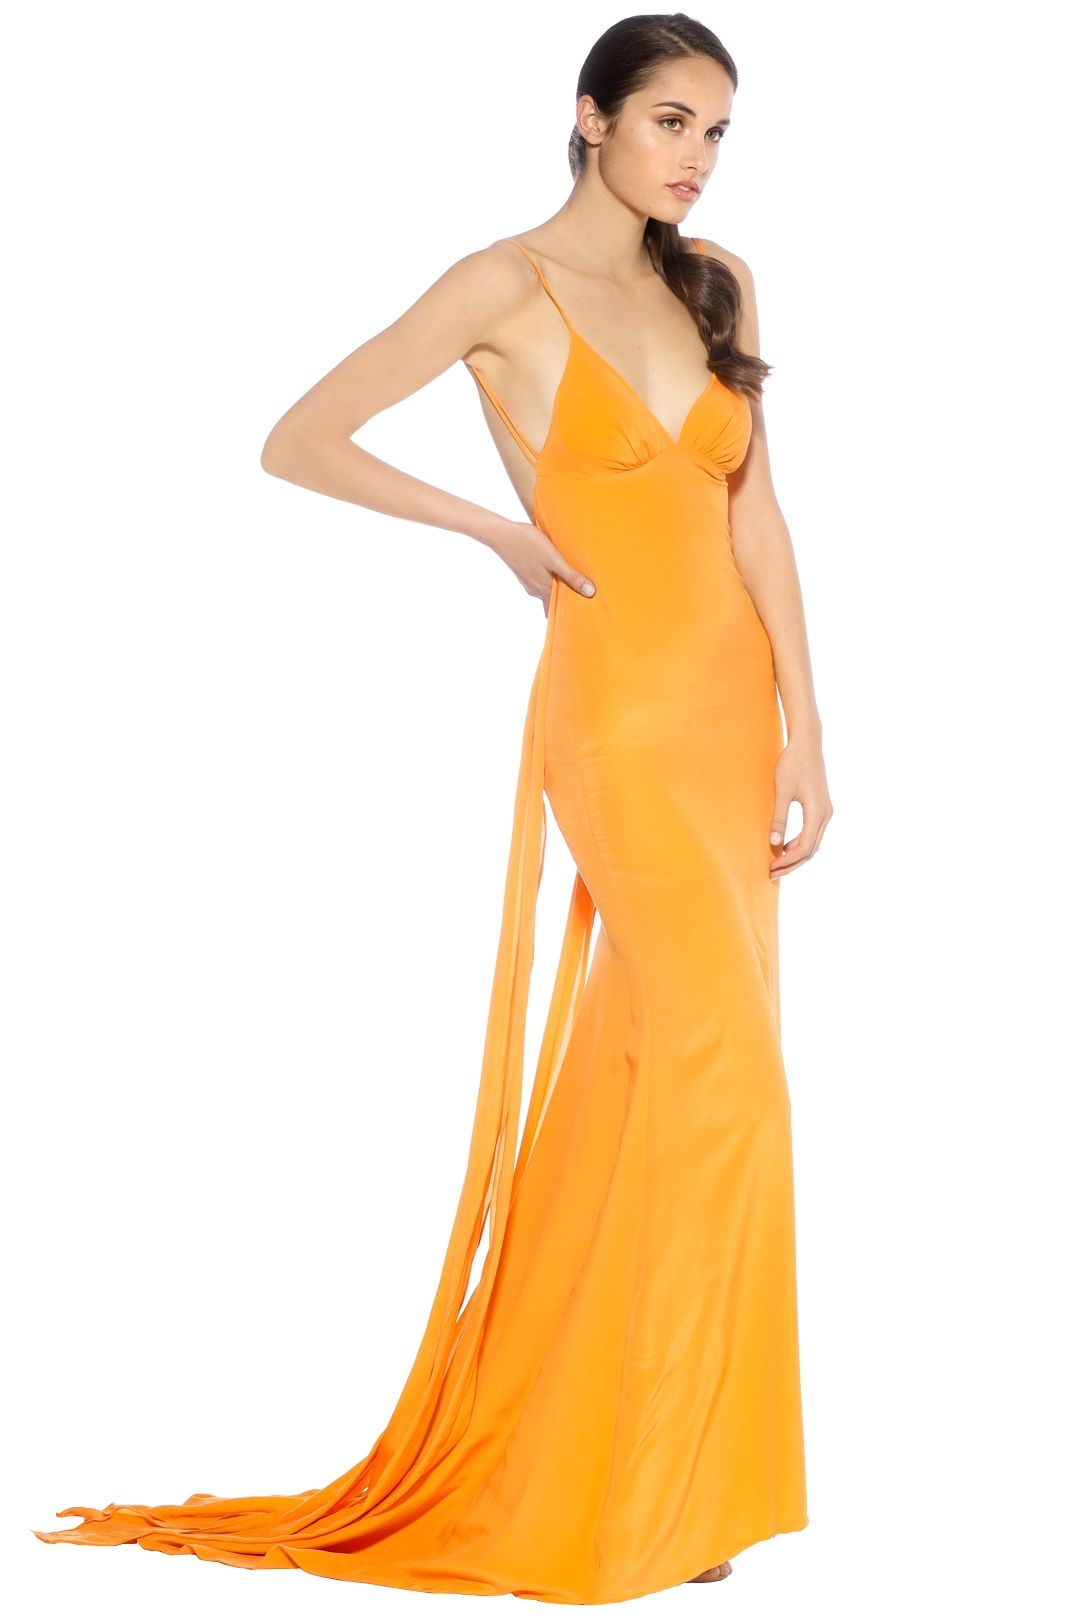 LUOM.O - Manhattan Dress - Tangerine - Side